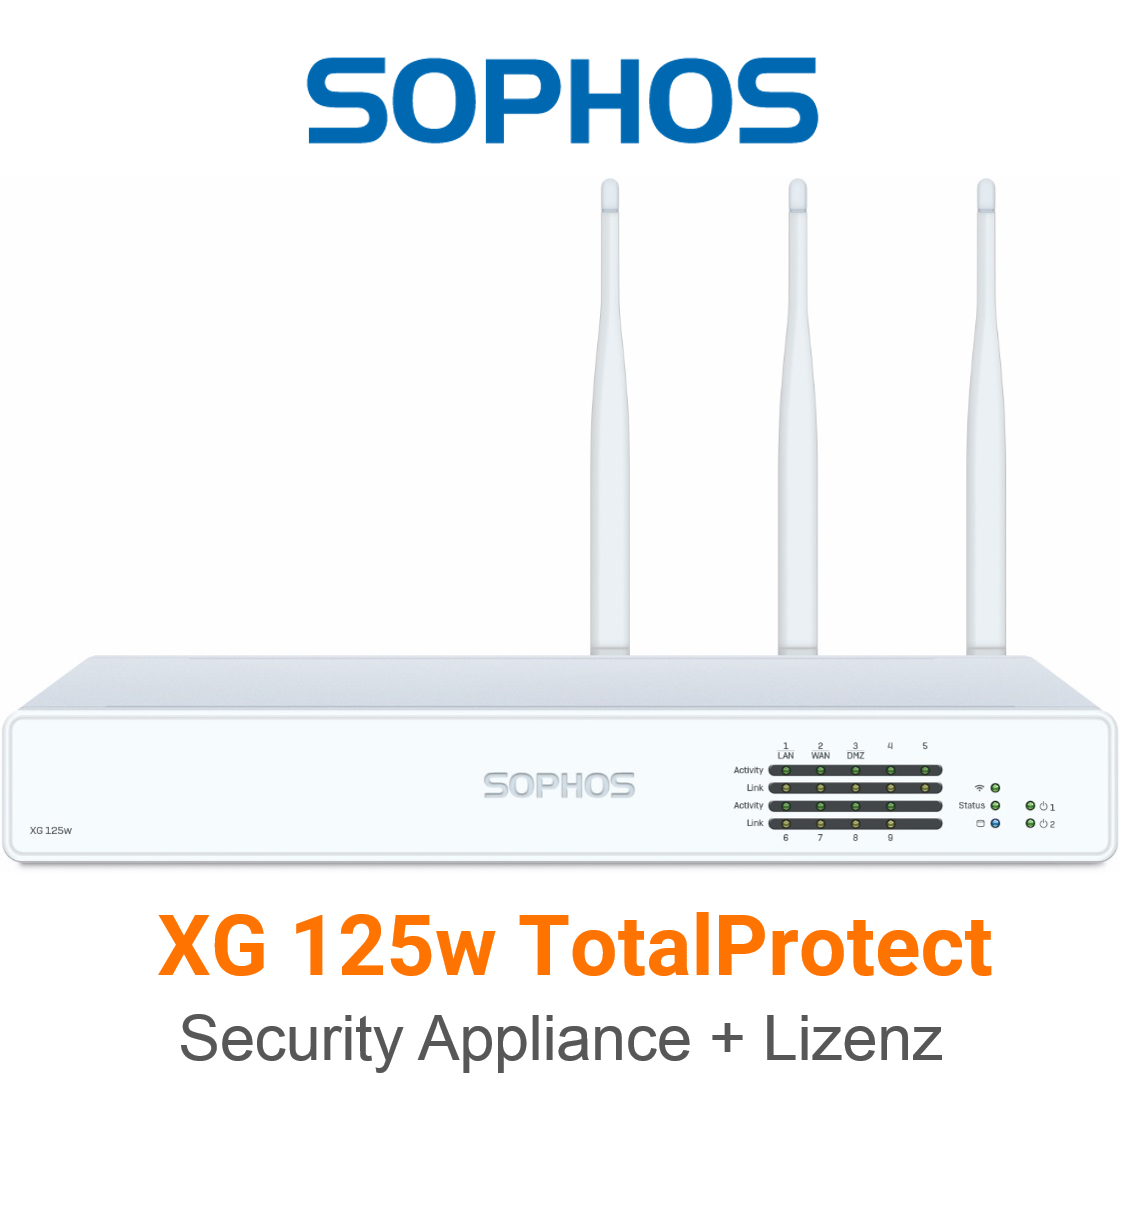 Sophos XG 125w Security Appliance